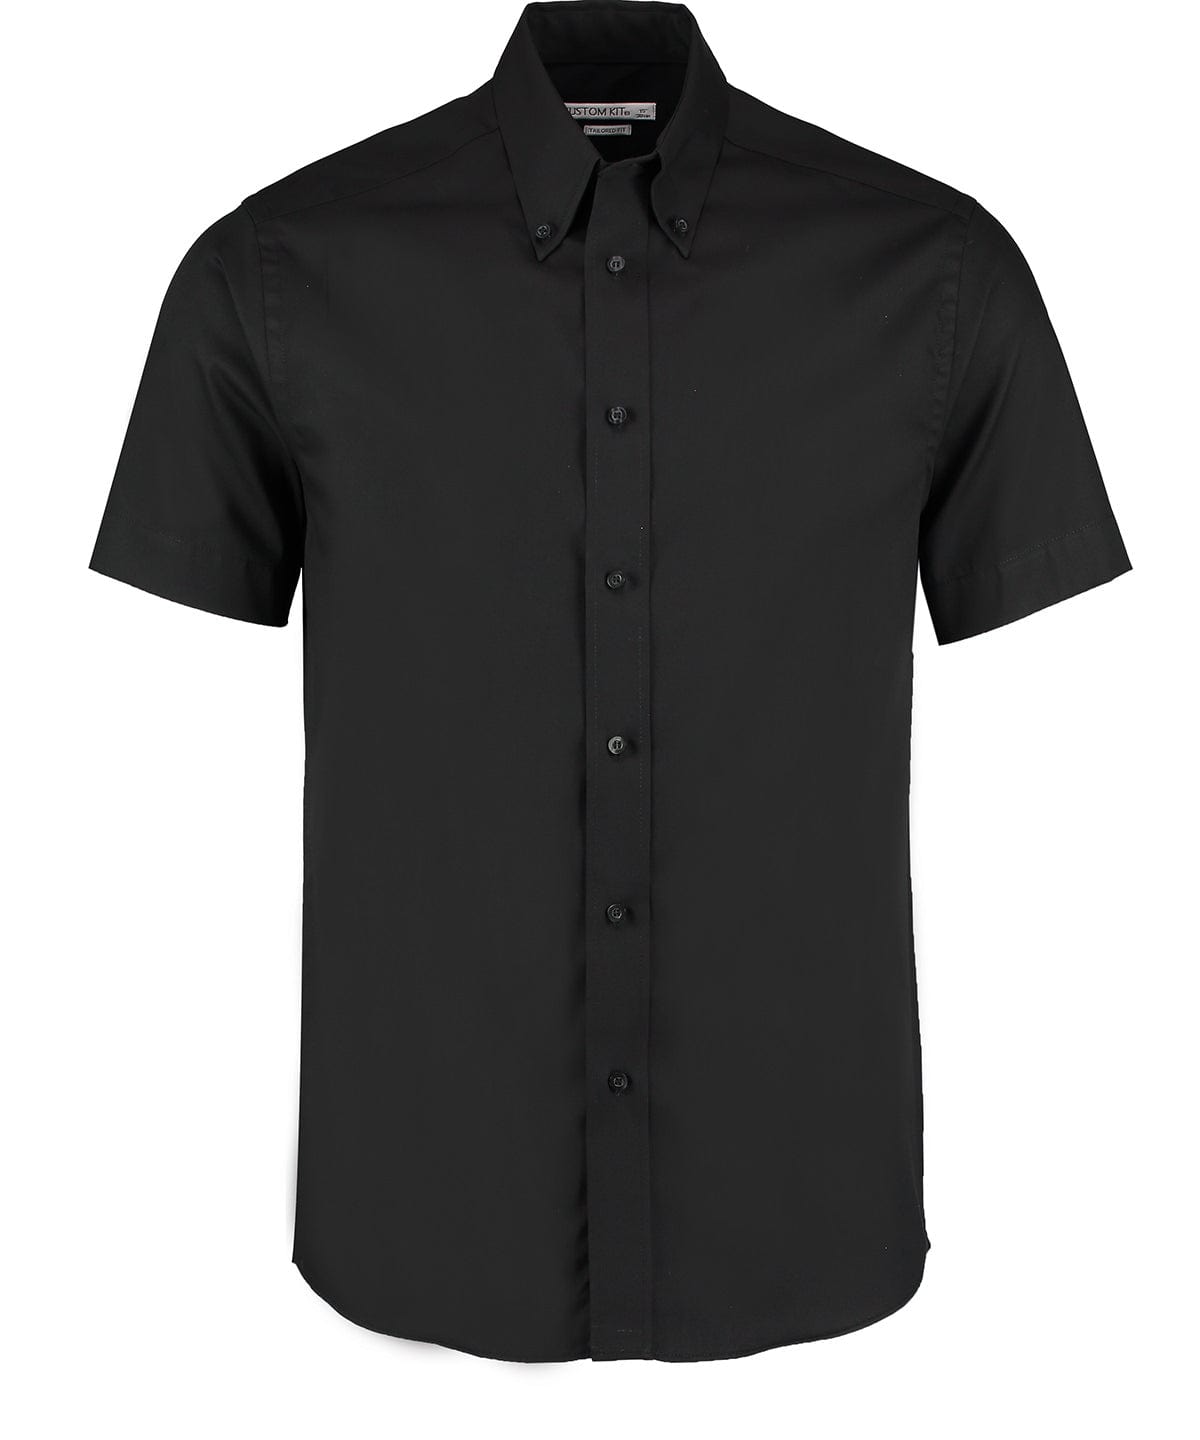 Premium Oxford shirt short-sleeved (tailored fit) | Black